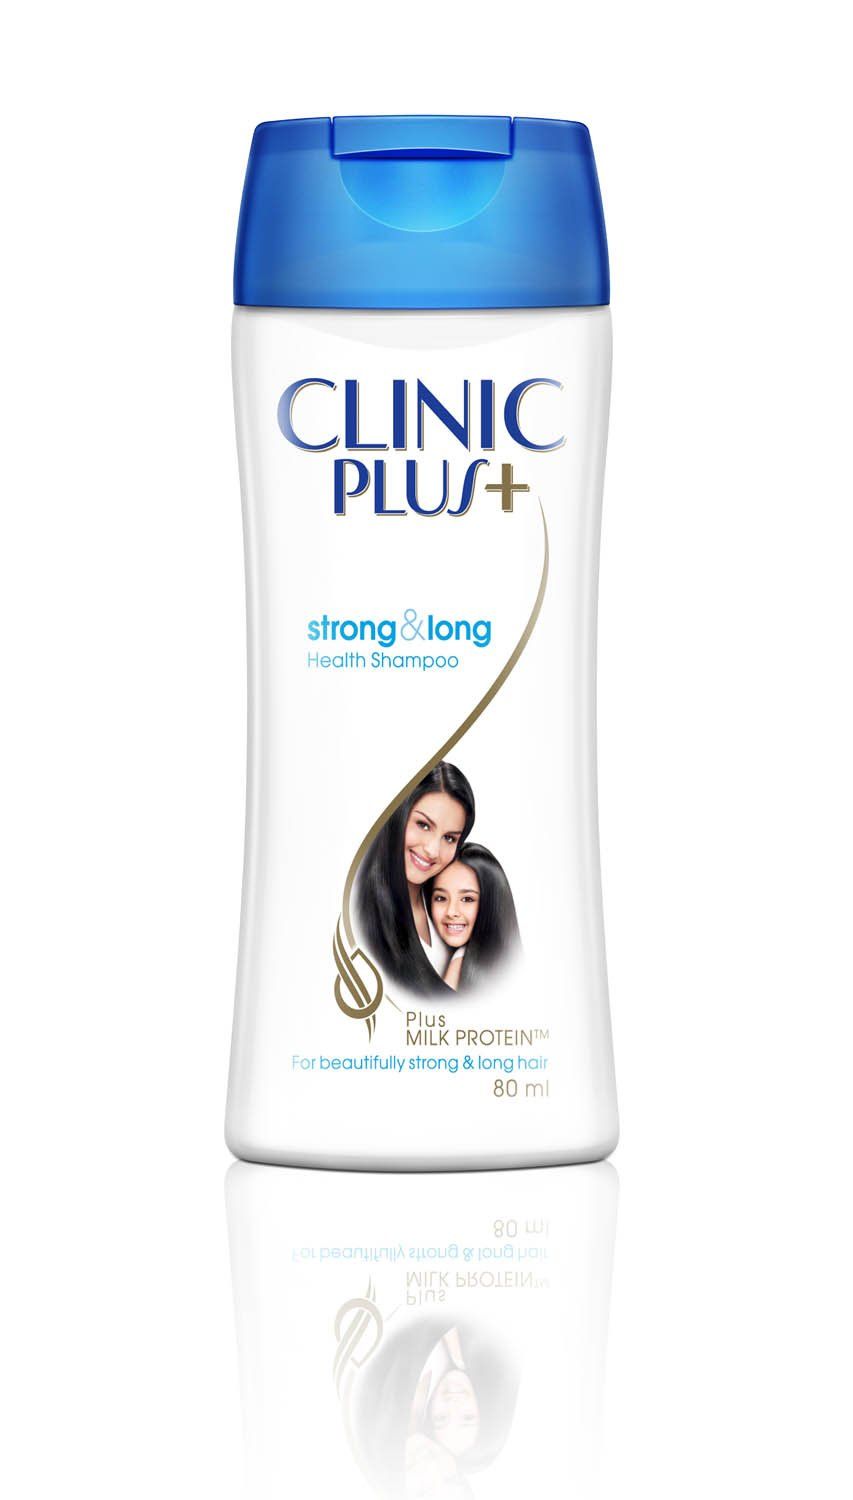 Clinic Plus Clinicplus Shampoo Bottle